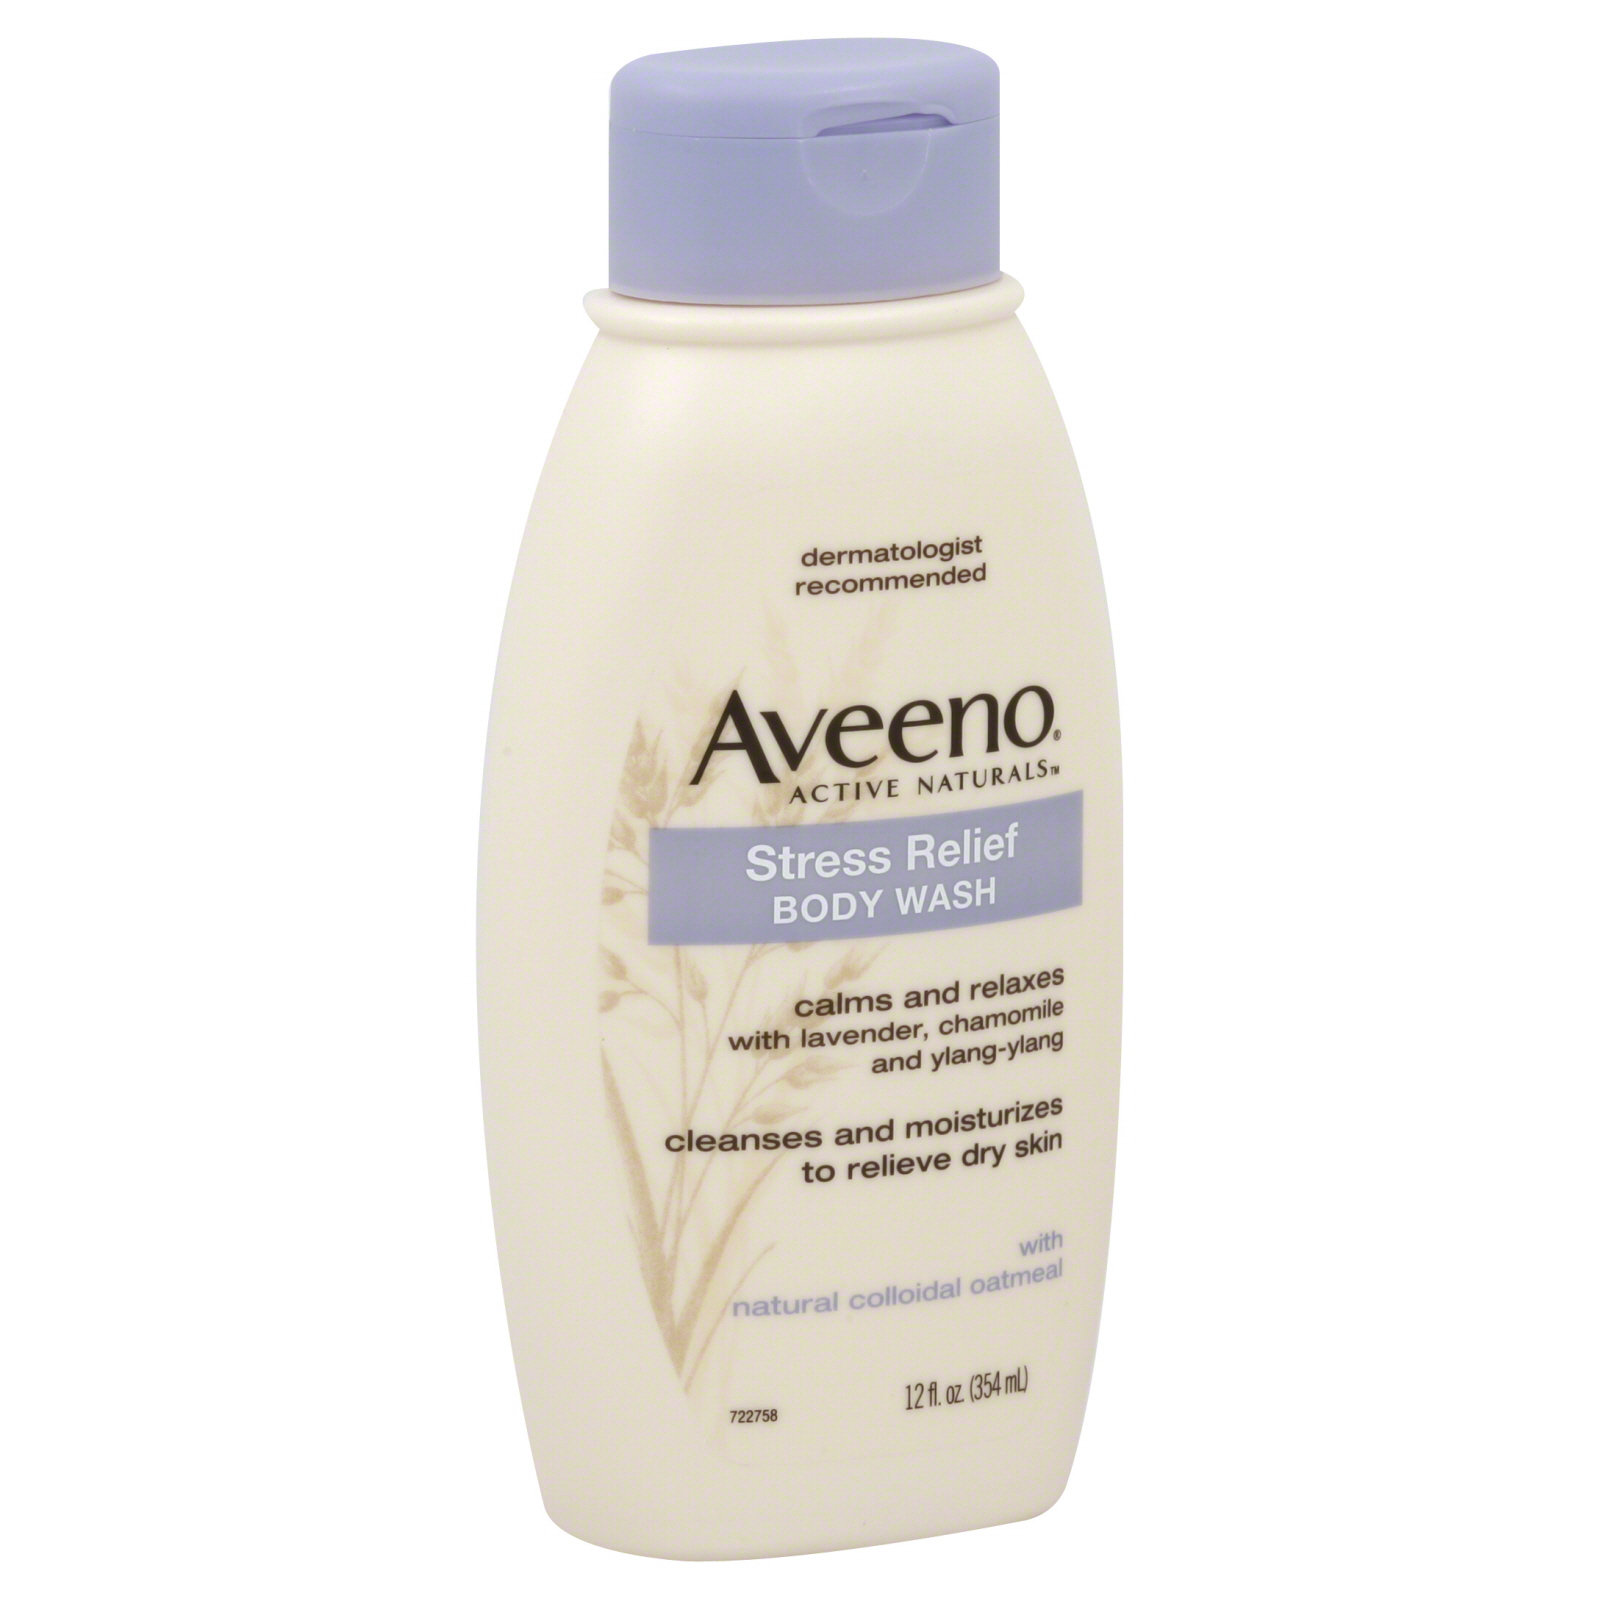 Aveeno Active Naturals Body Wash, Stress Relief, 12 fl oz (354 ml)